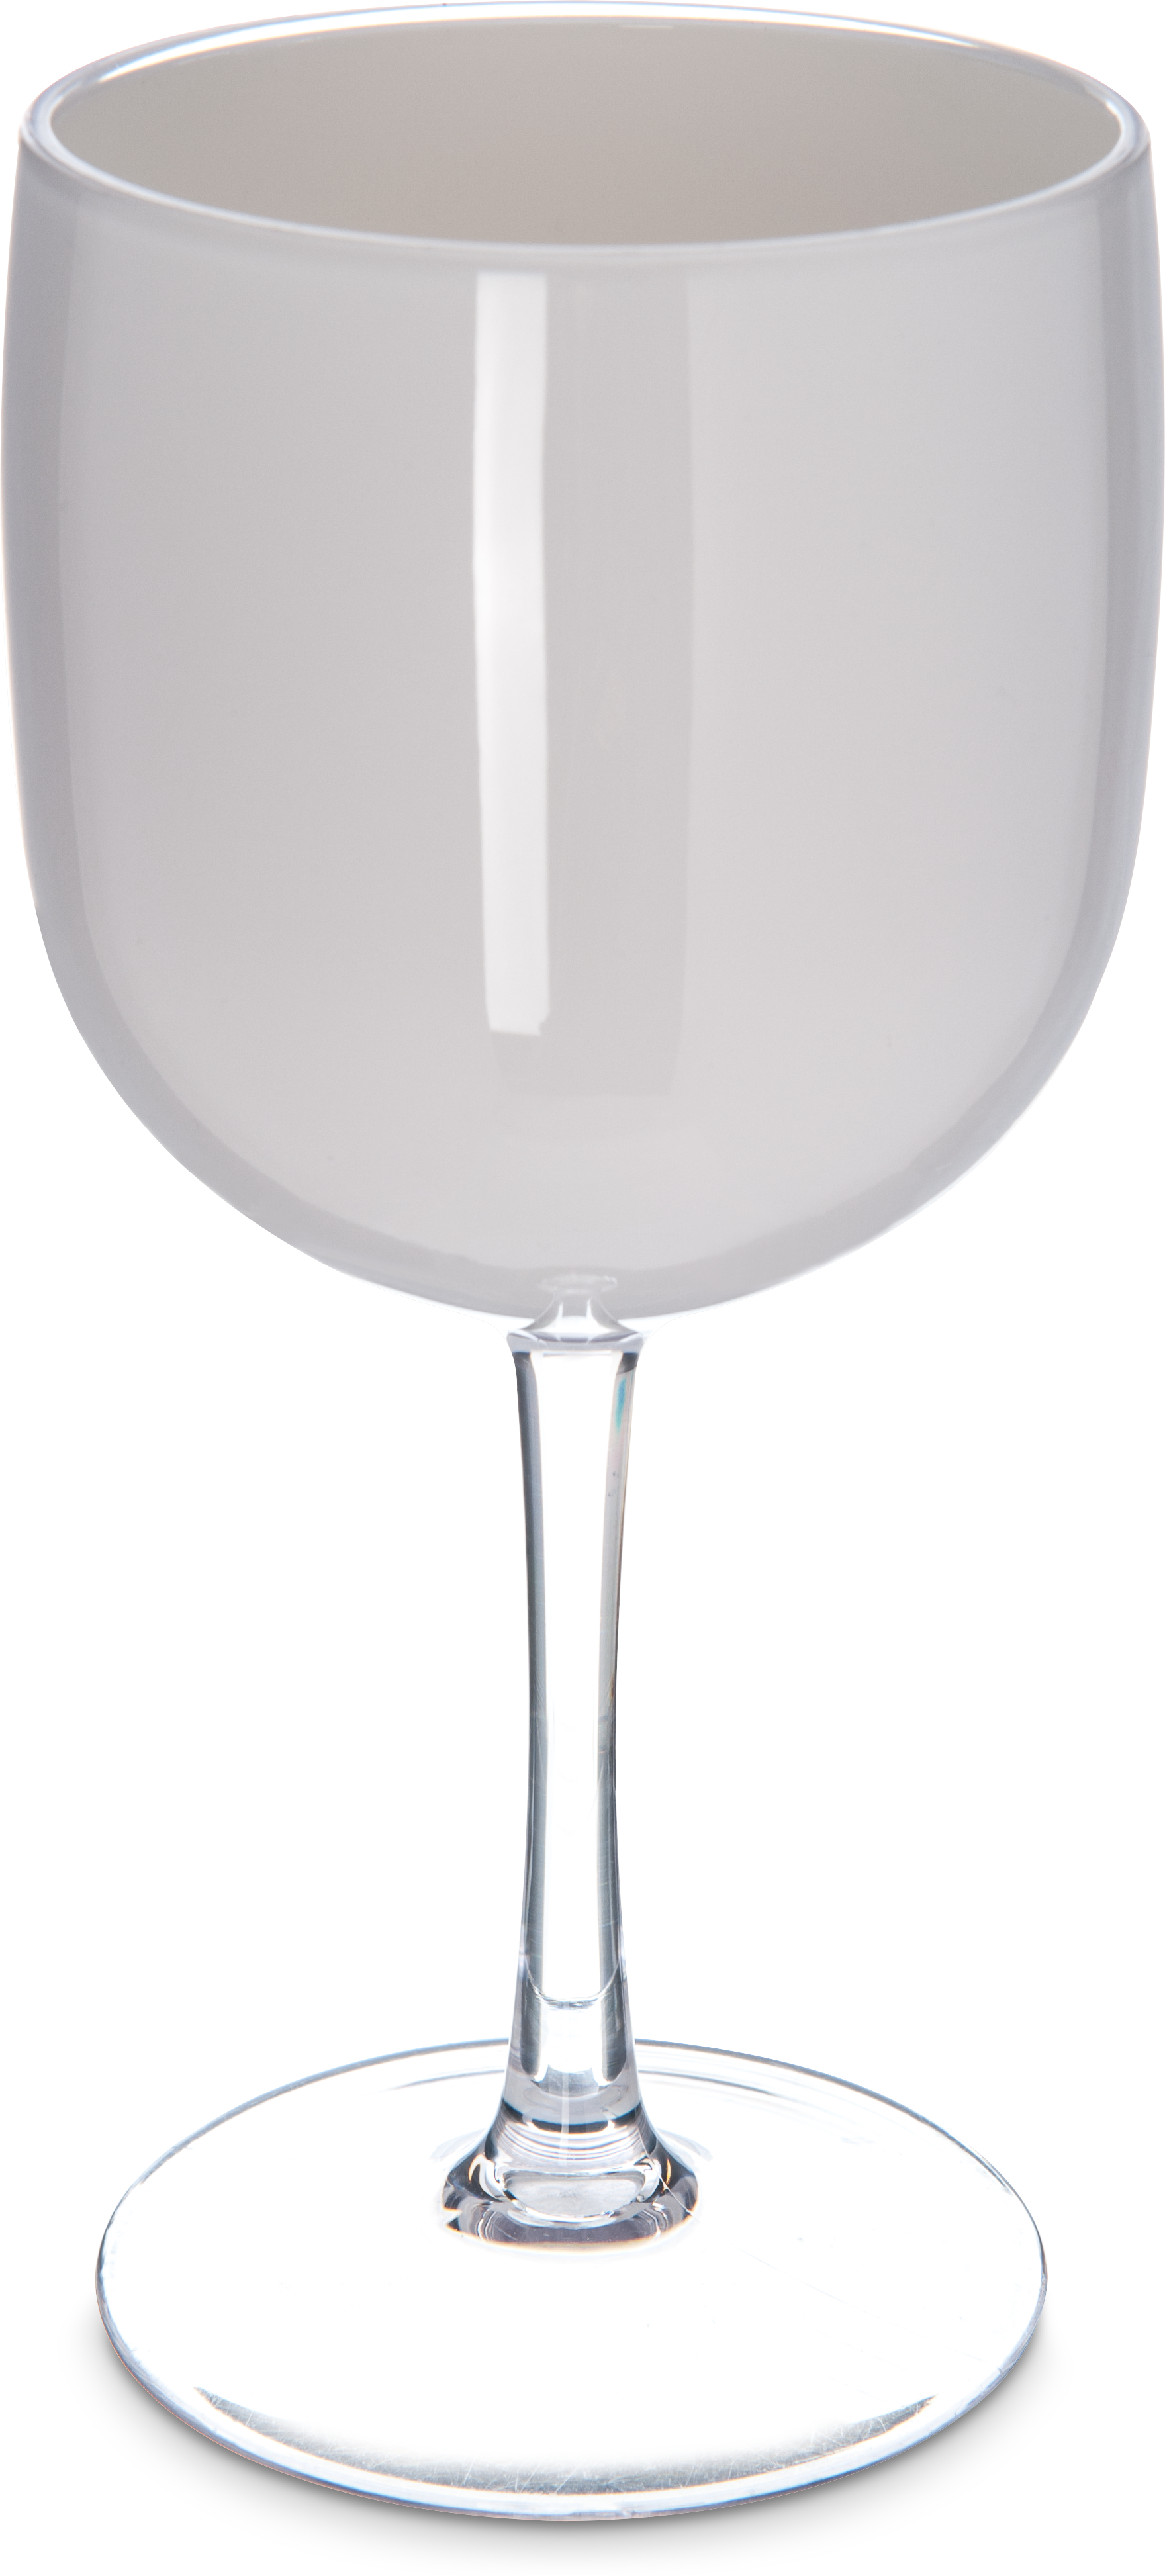 Epicure Cased Wine Goblet 16 oz - White